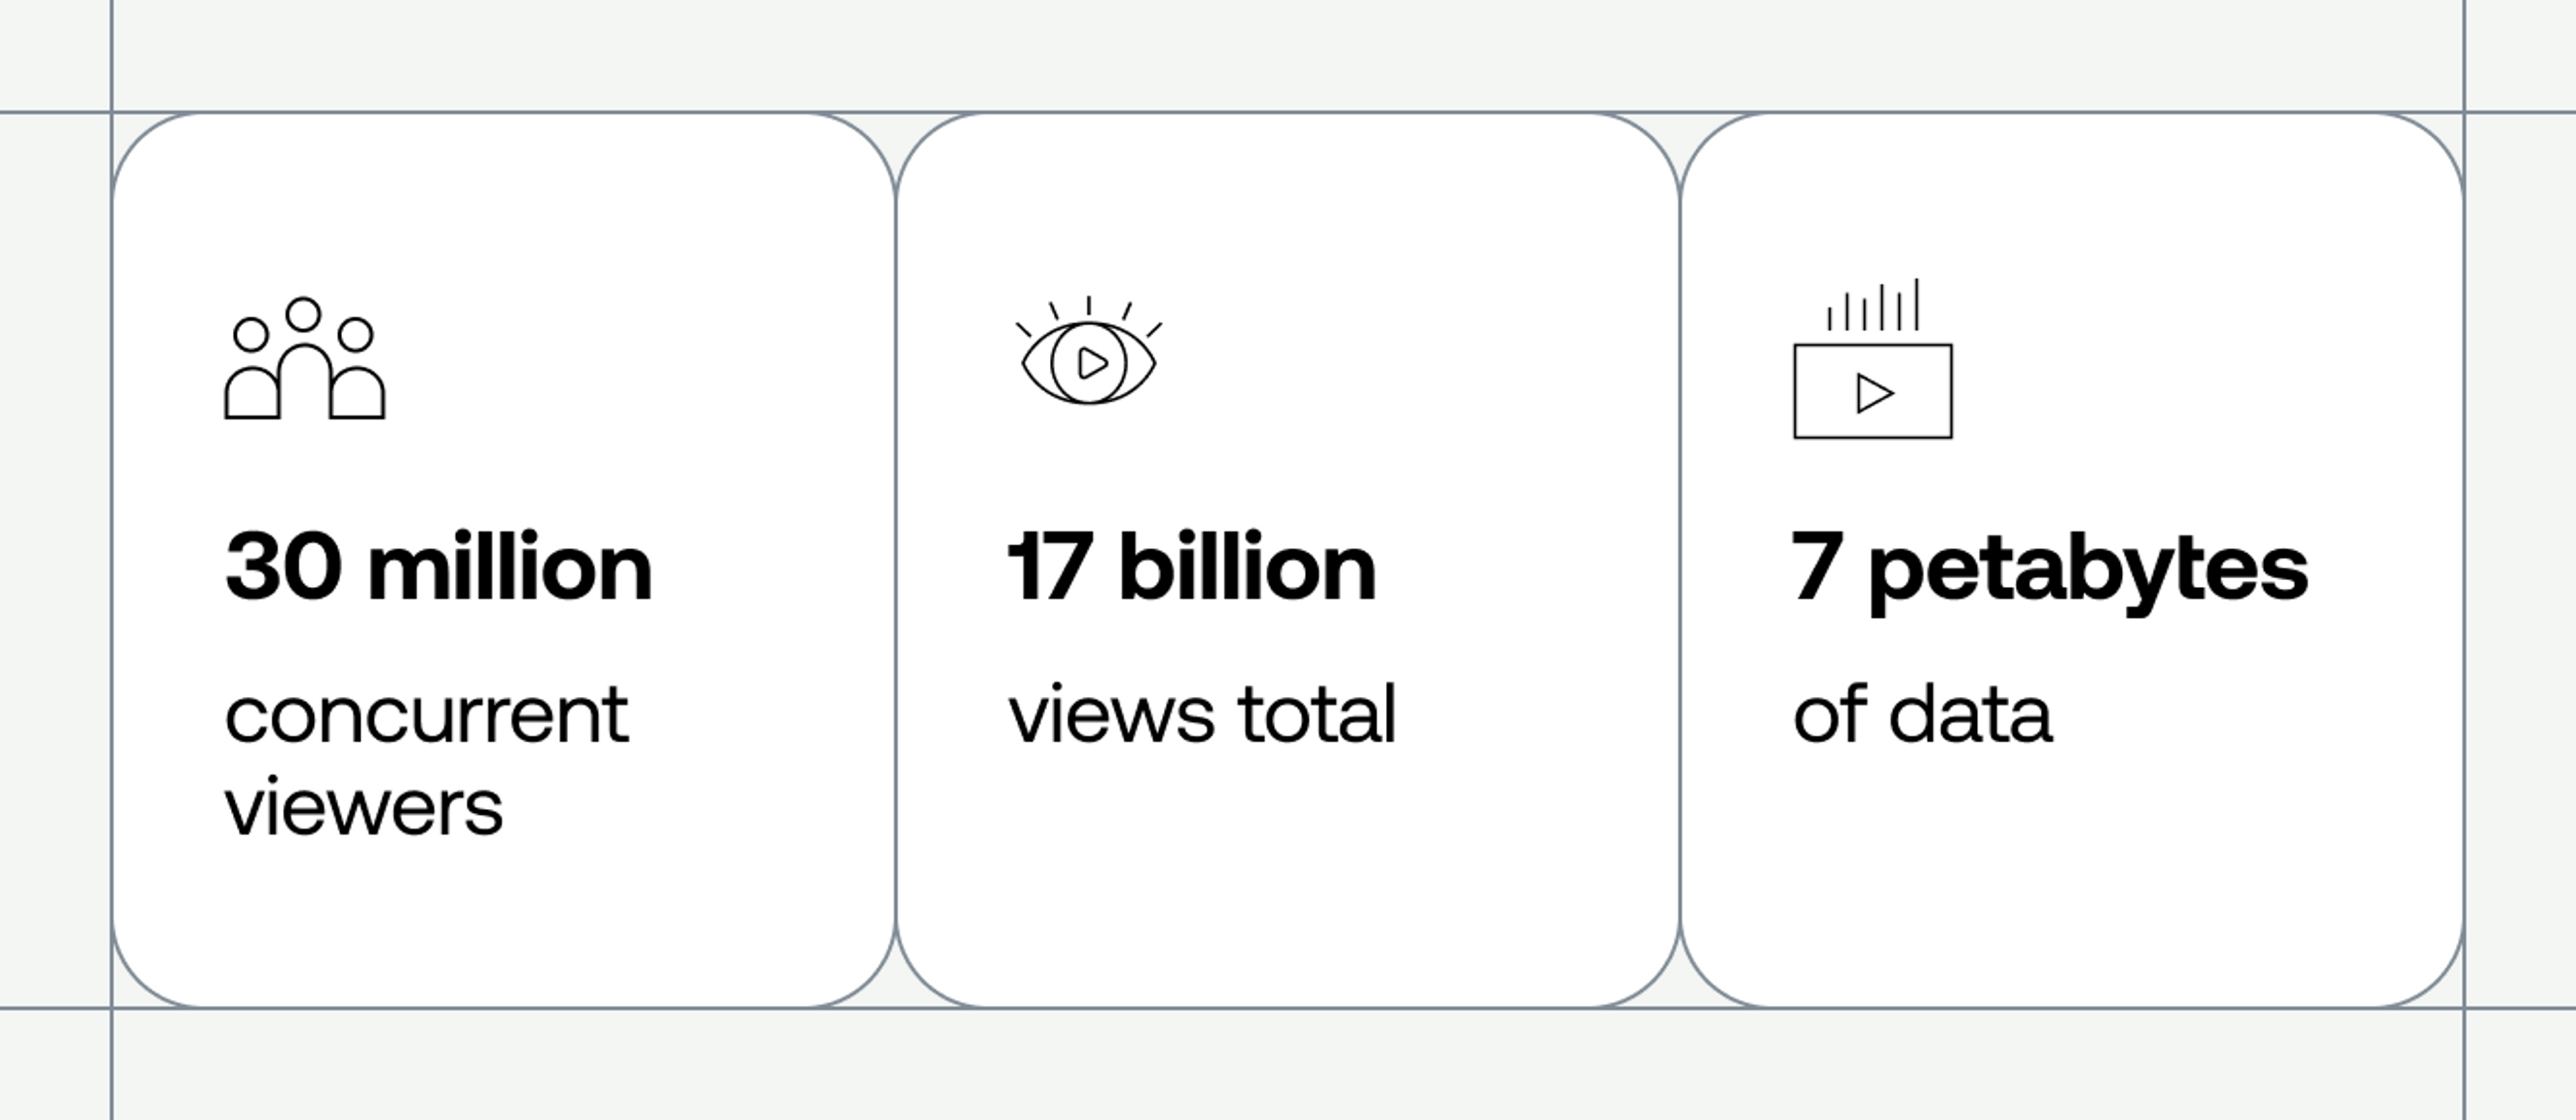 30 million concurrent viewers, 17 billion views total, 7 petabytes of data